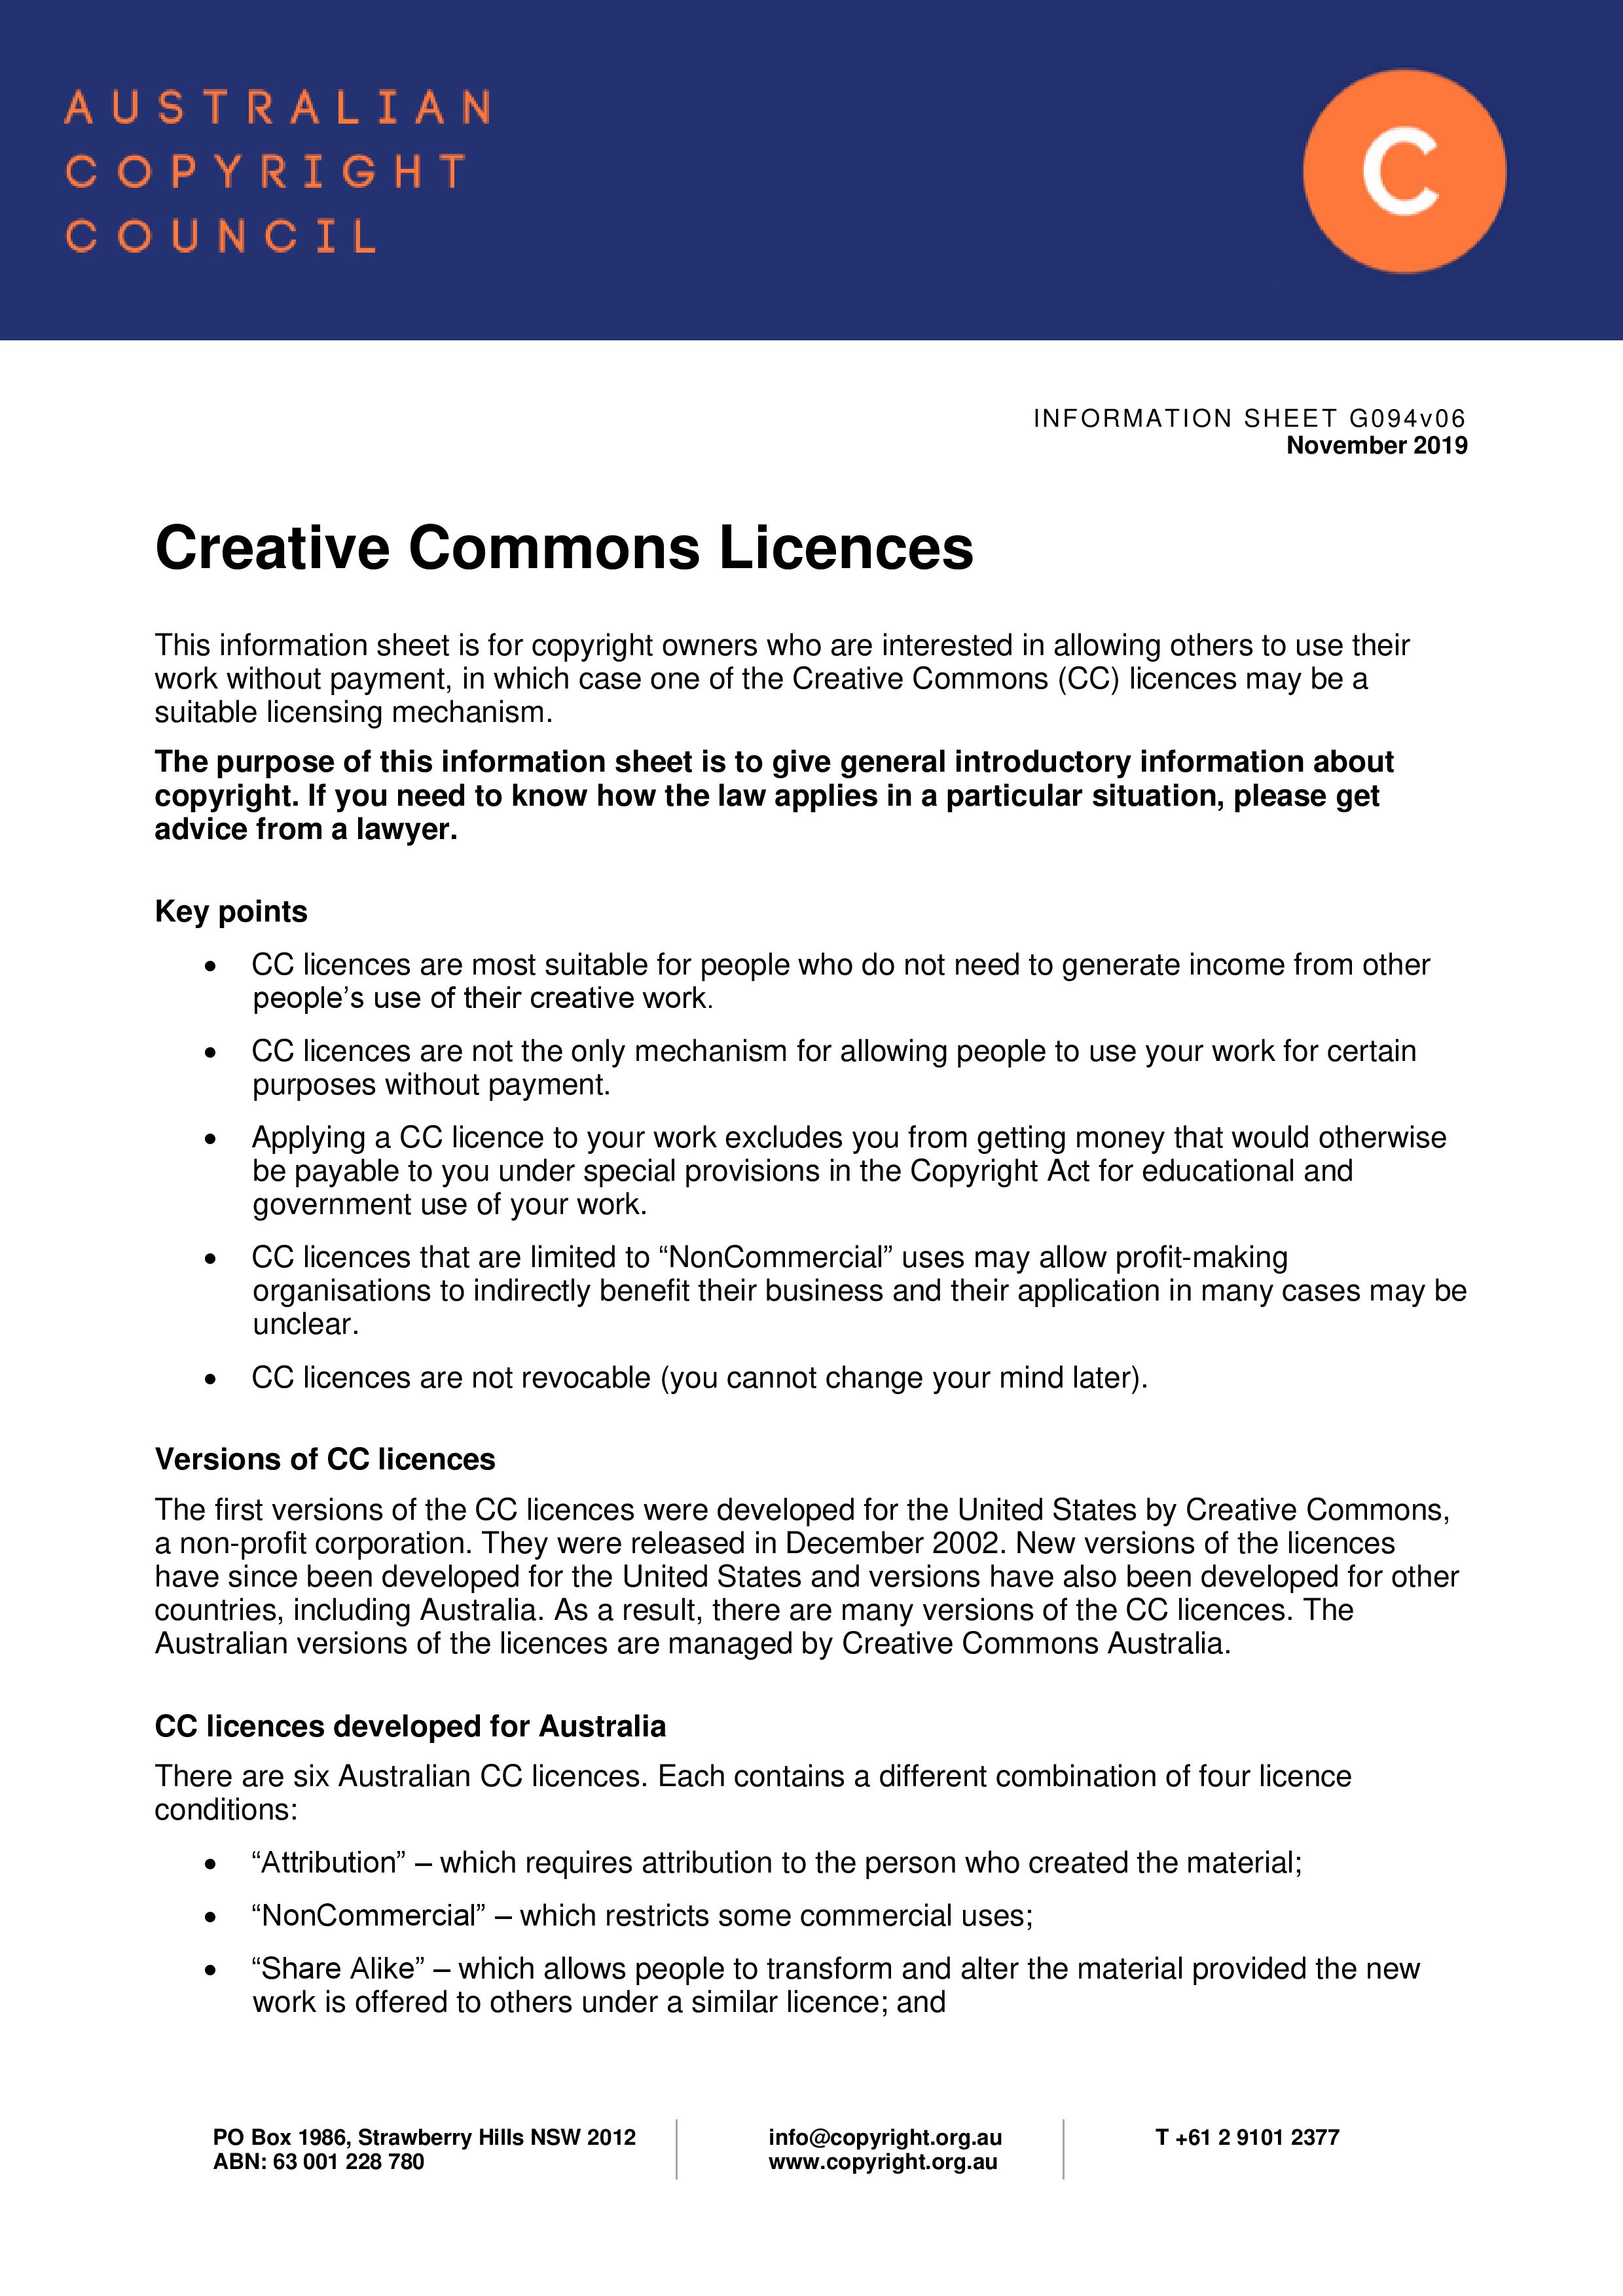 Australian Creative Commons Licences 2019